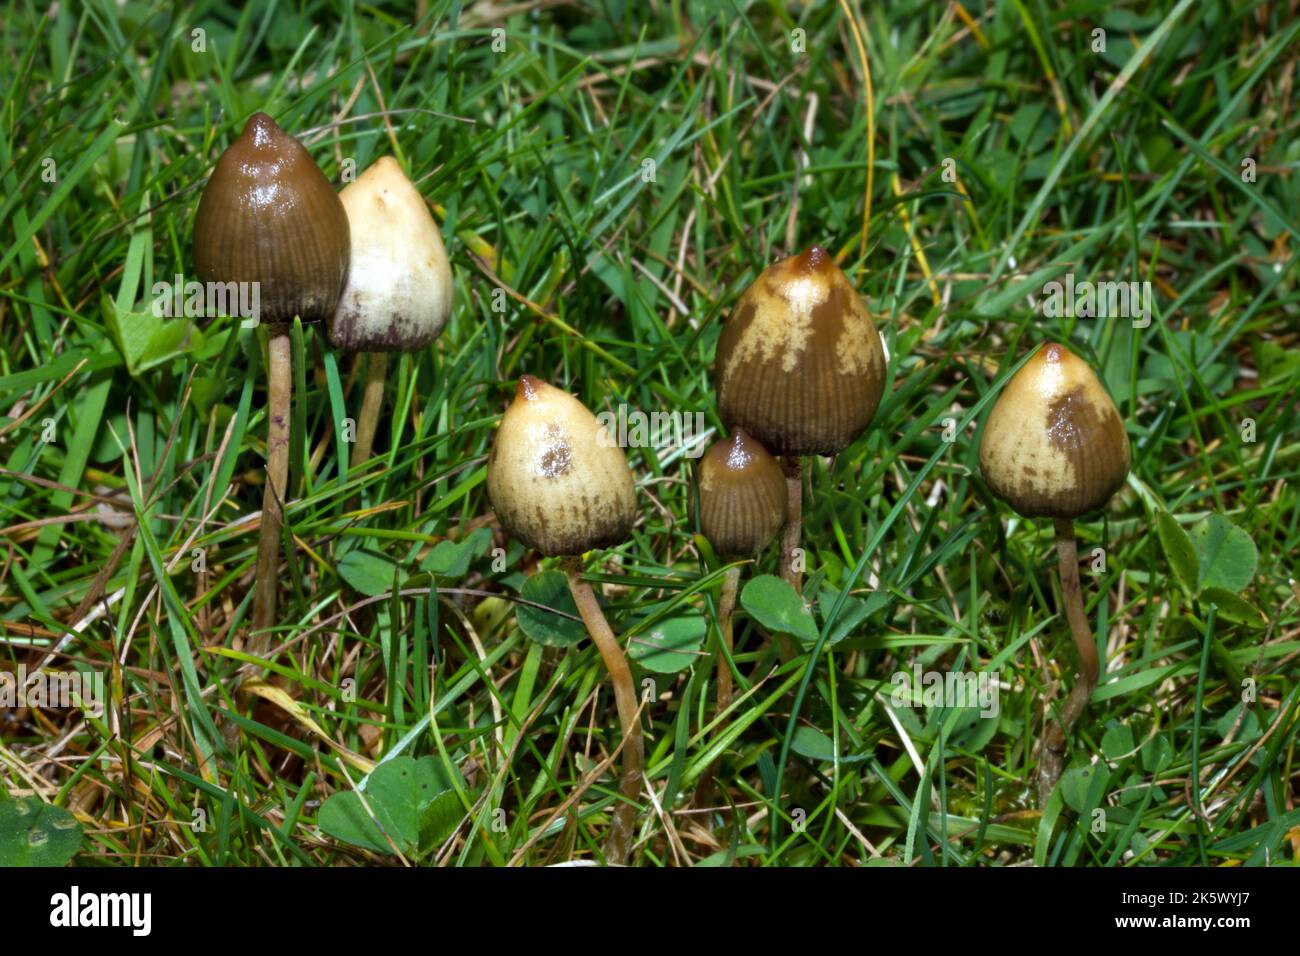 Psilocybe semilanceata (liberty cap) is native to Europe growing in natural acidic grasslands. It has hallucinogenic properties. Stock Photo